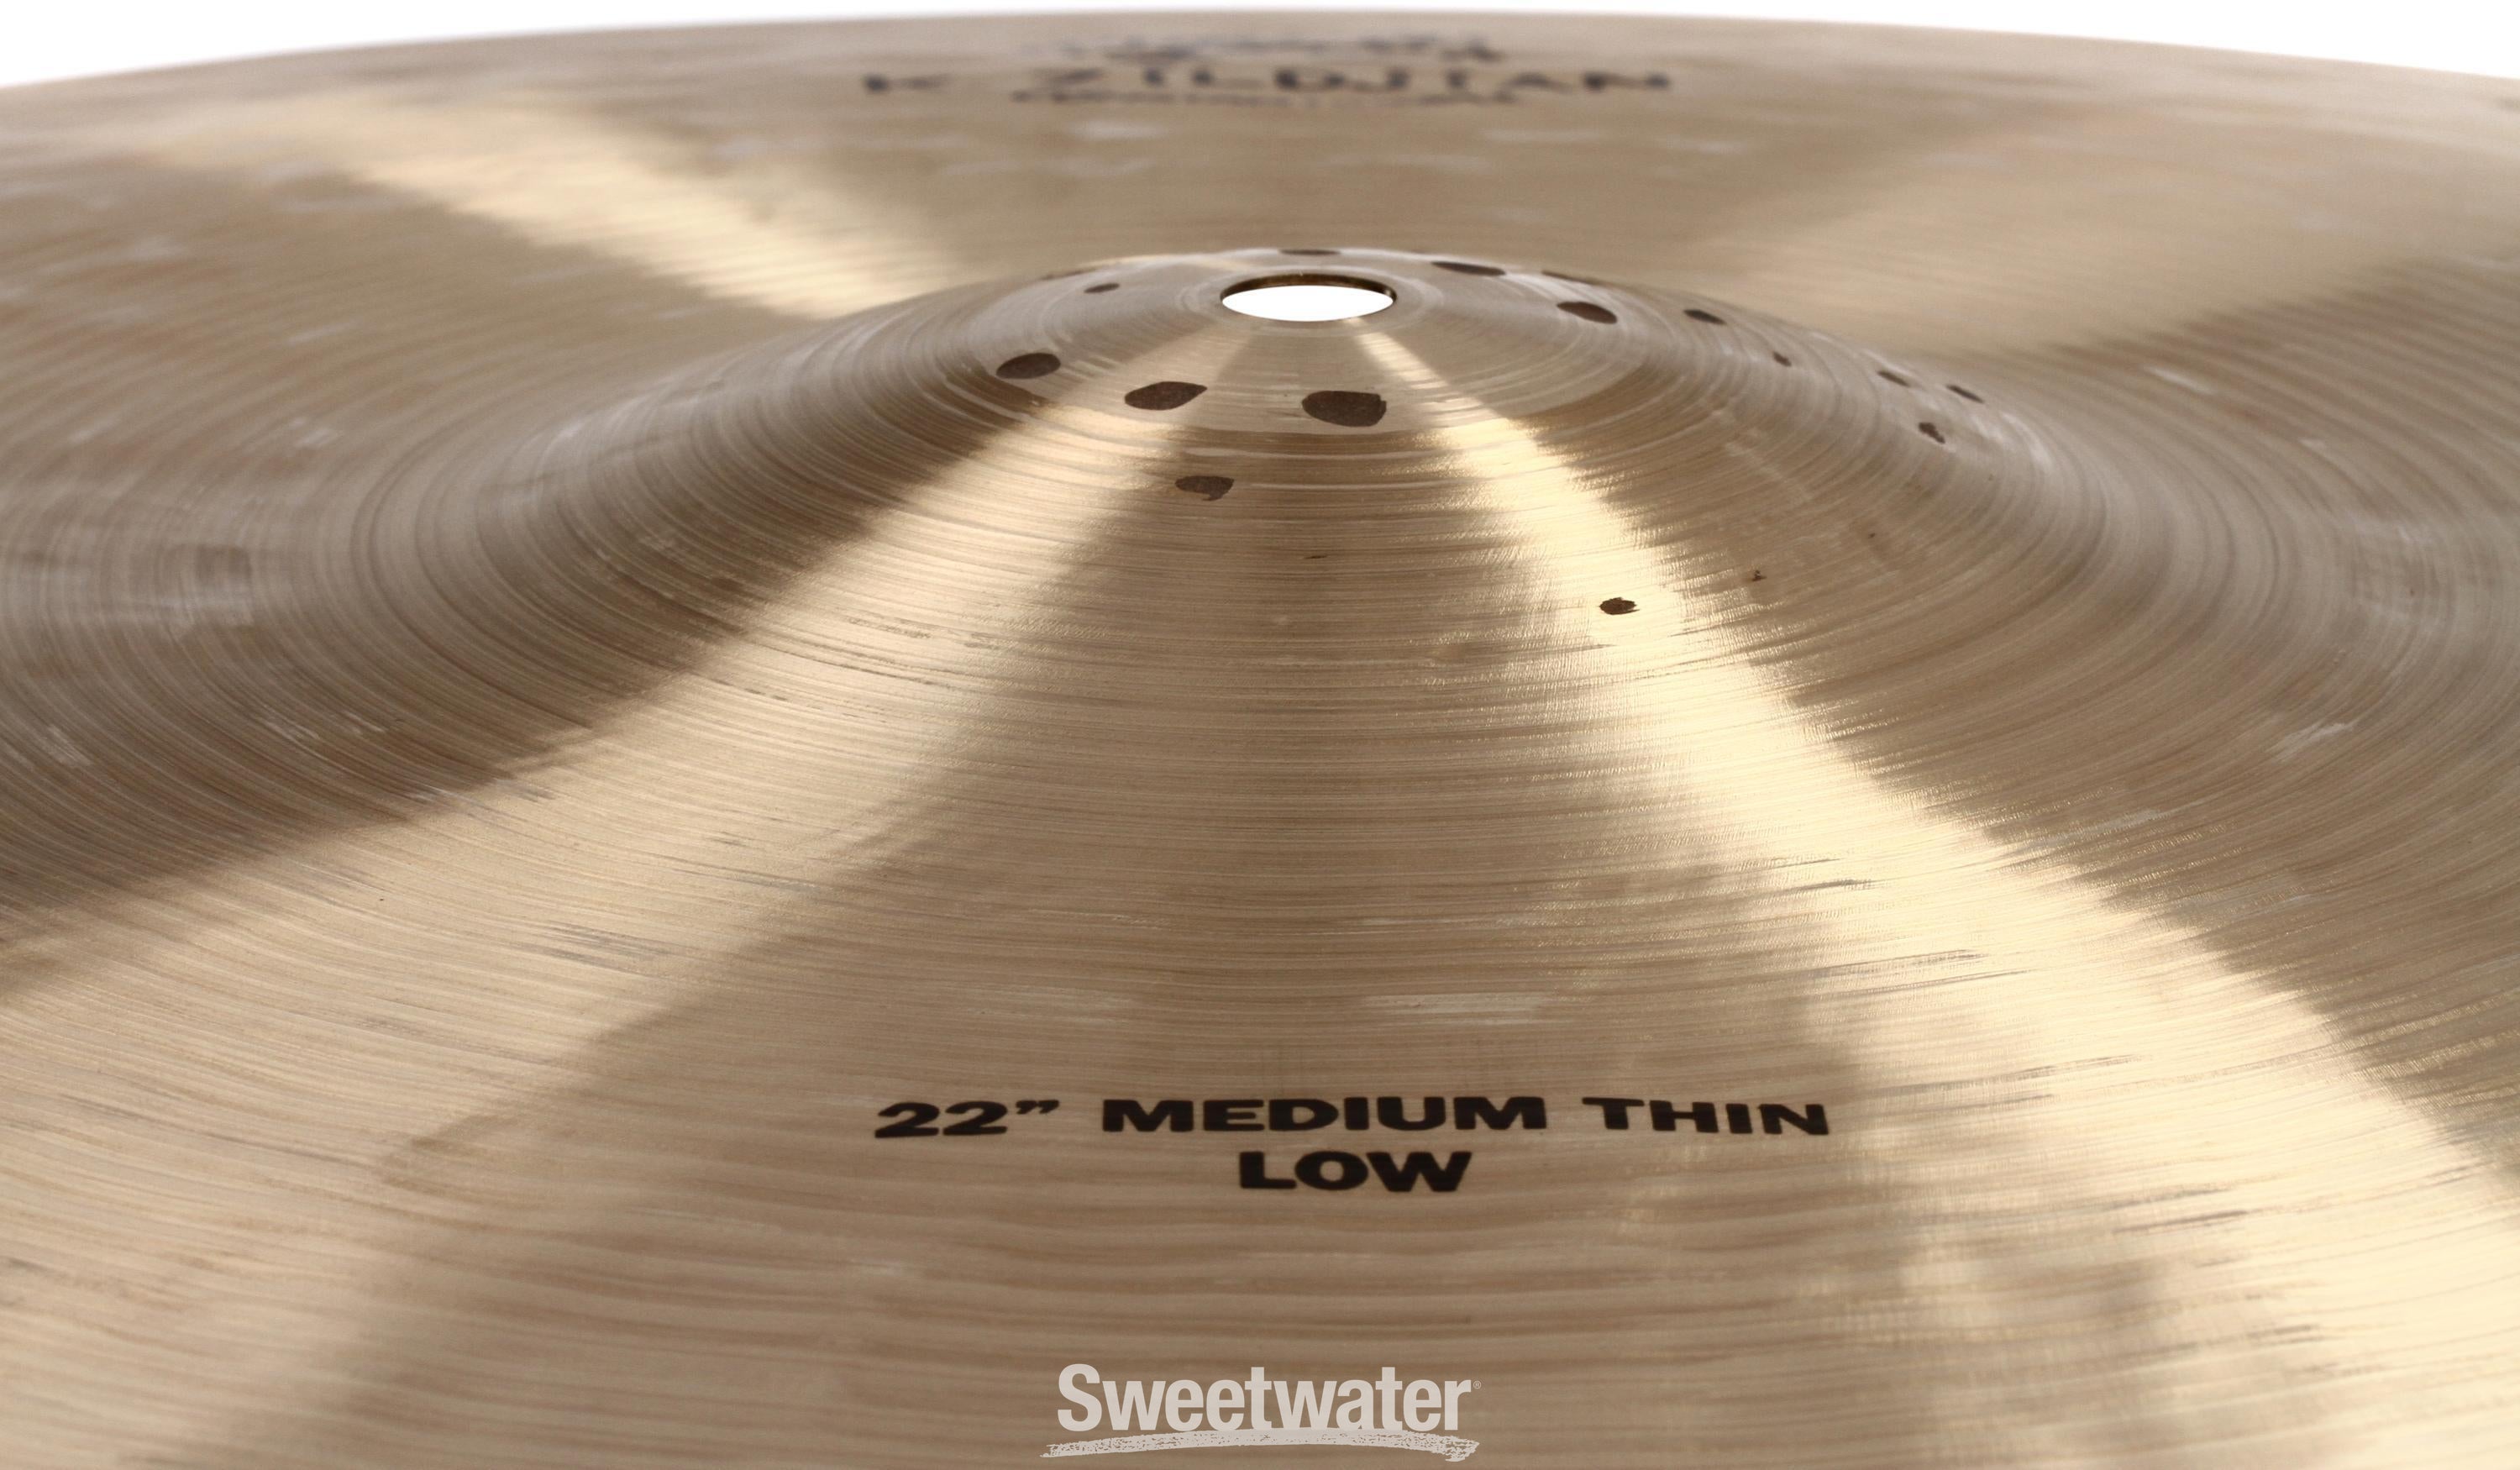 Zildjian 22 inch K Constantinople Medium Thin Ride Cymbal - Low Pitch